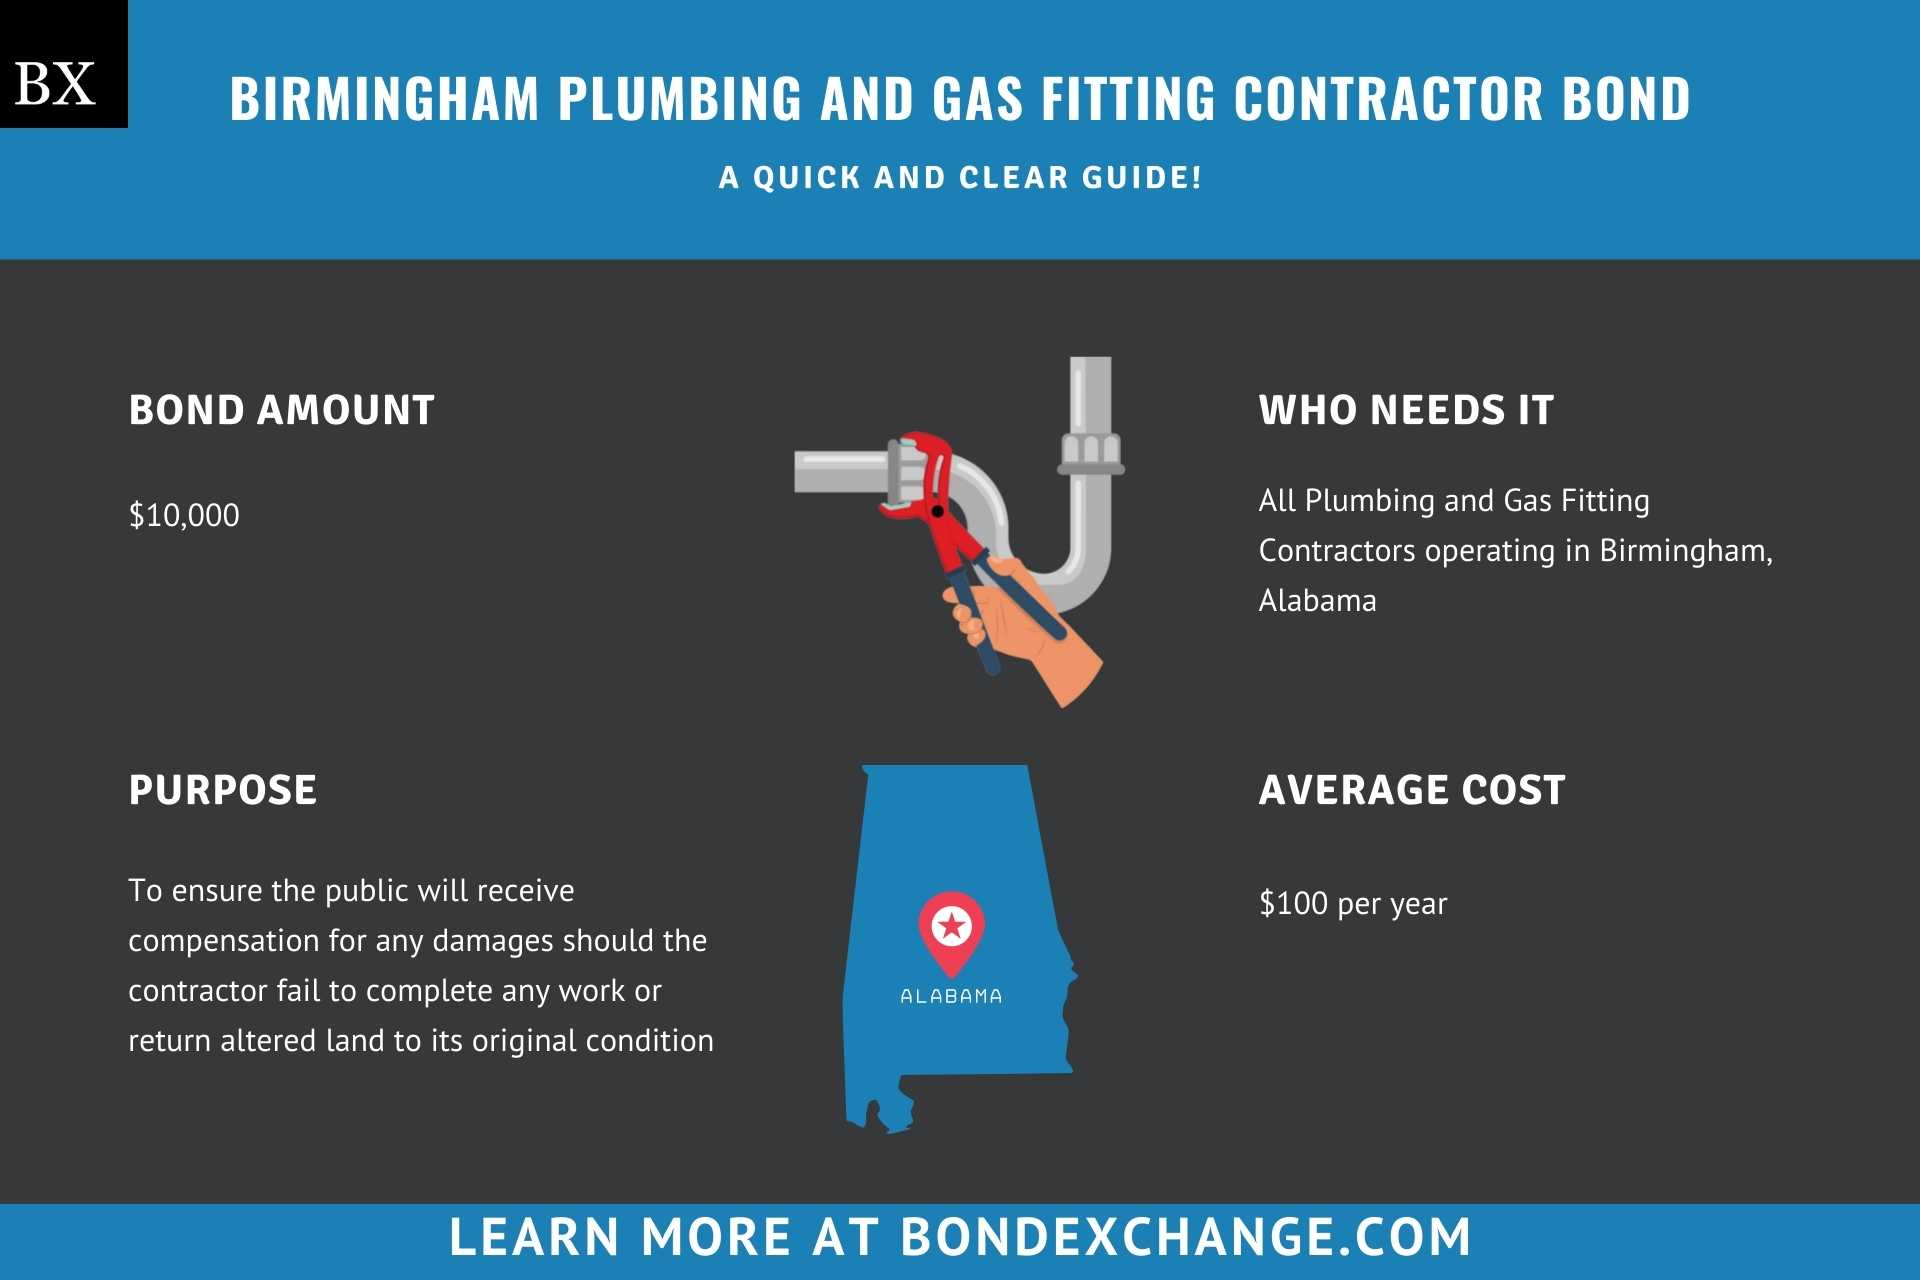 Birmingham Plumbing and Gas Fitting Contractor Bond